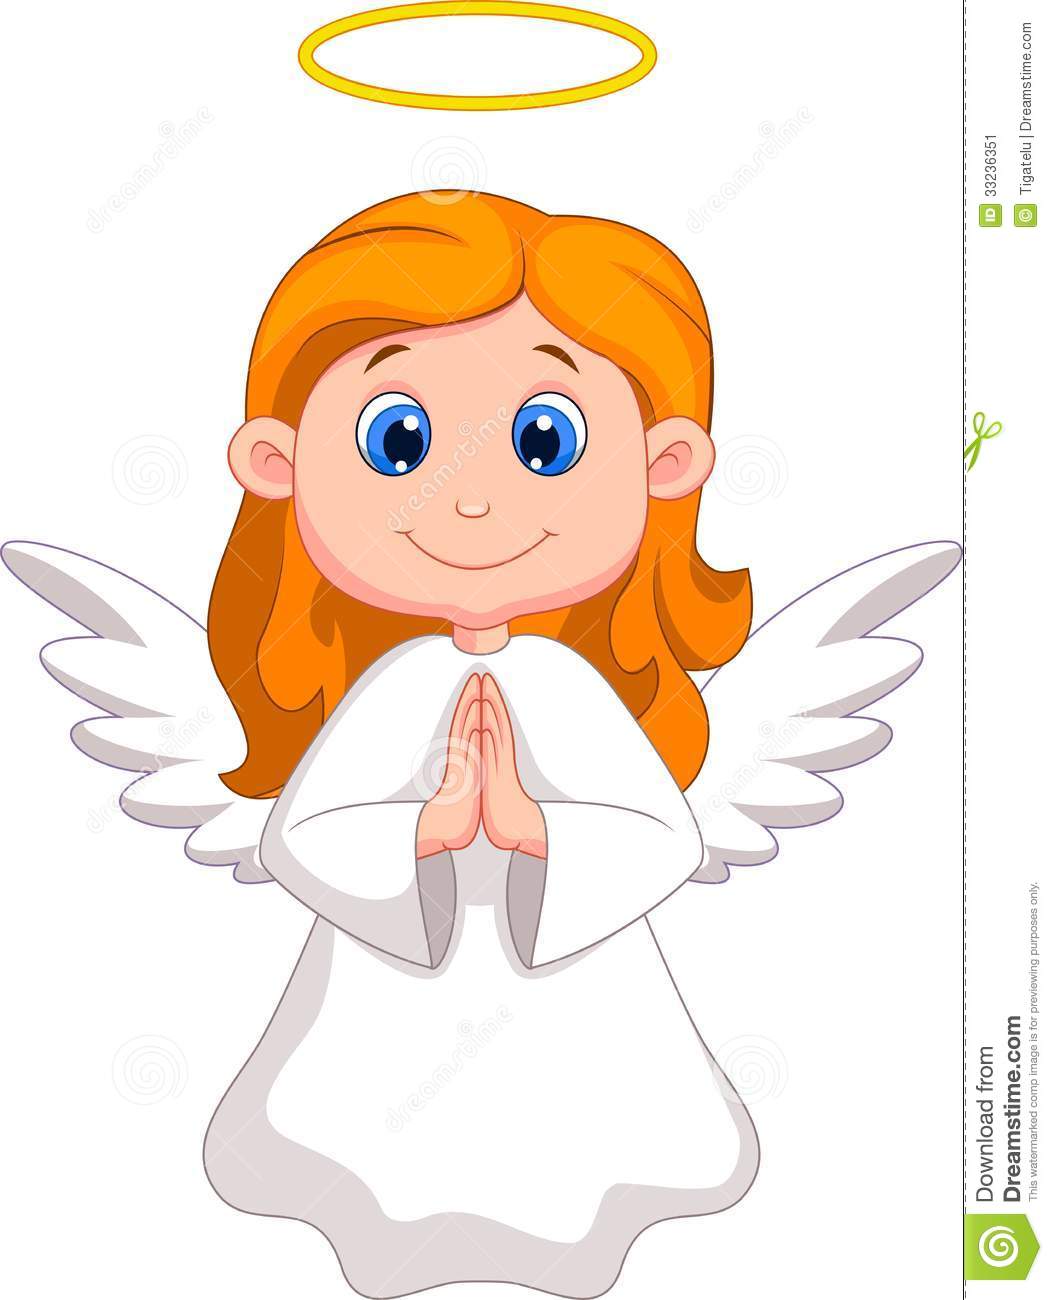 Cute Angel Cartoon Stock Image   Image  33236351